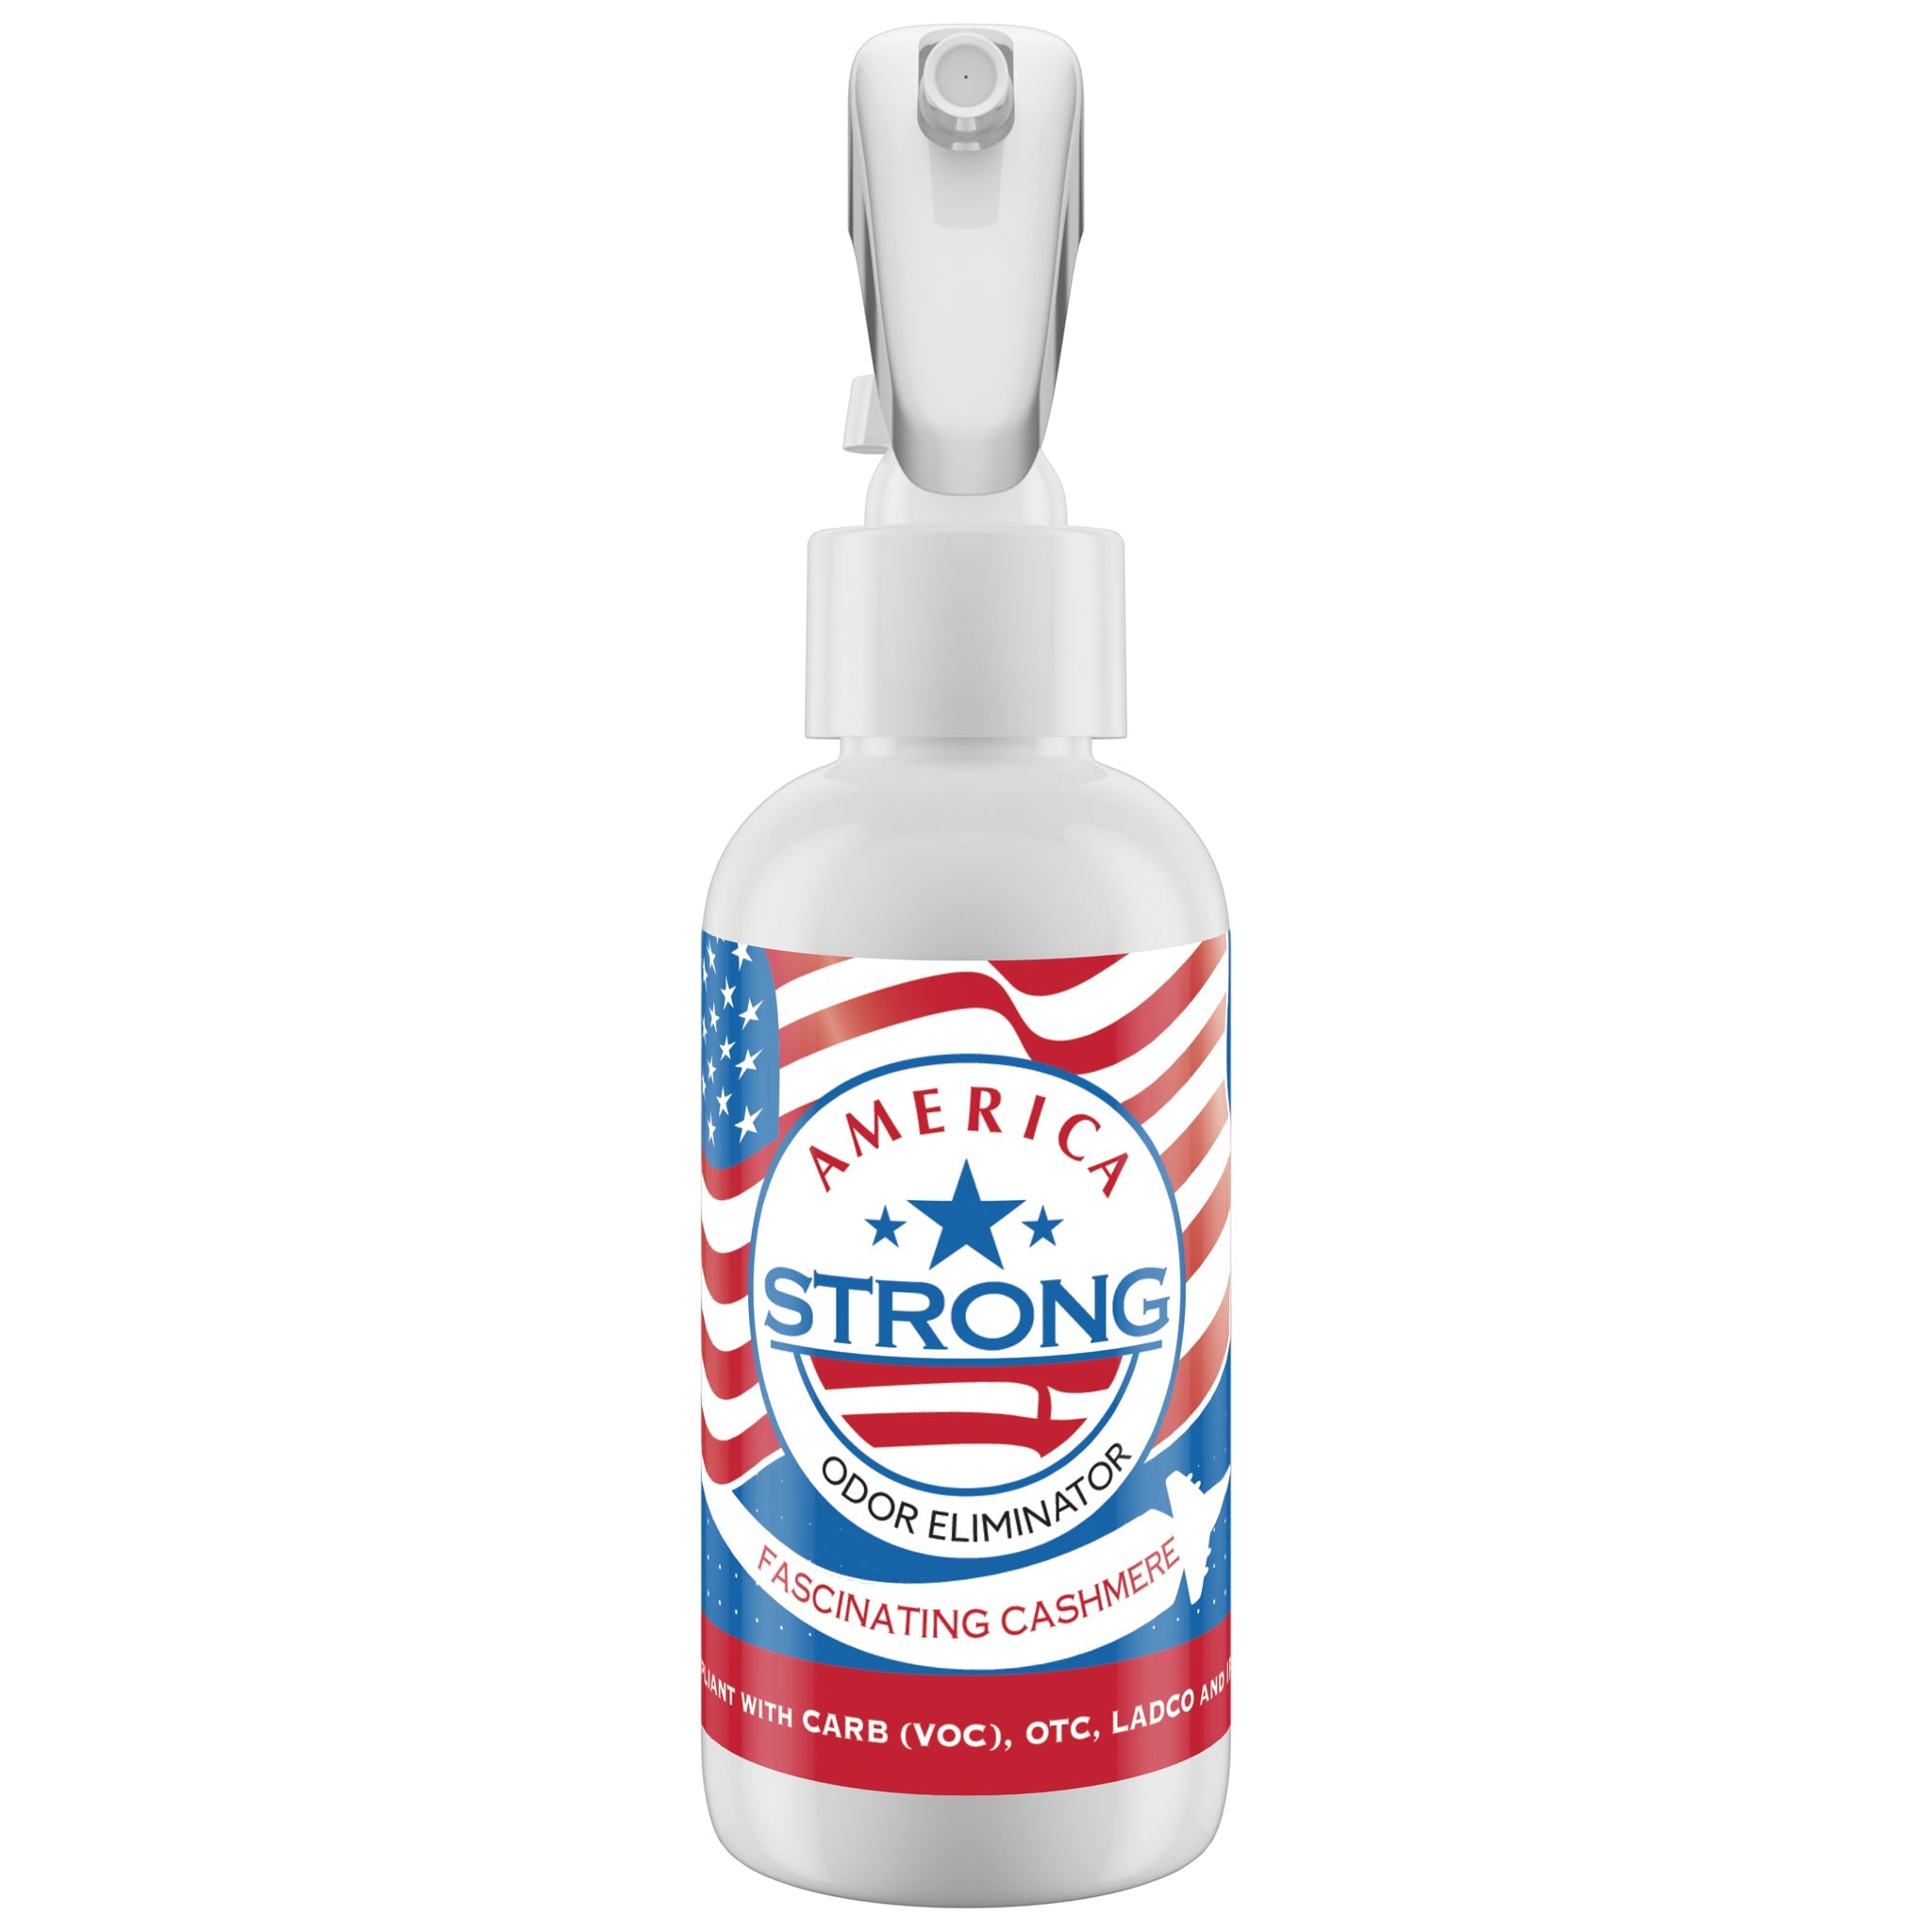 America Strong Odor Eliminator - Fascinating Cashmere Scent Size: 4.0oz